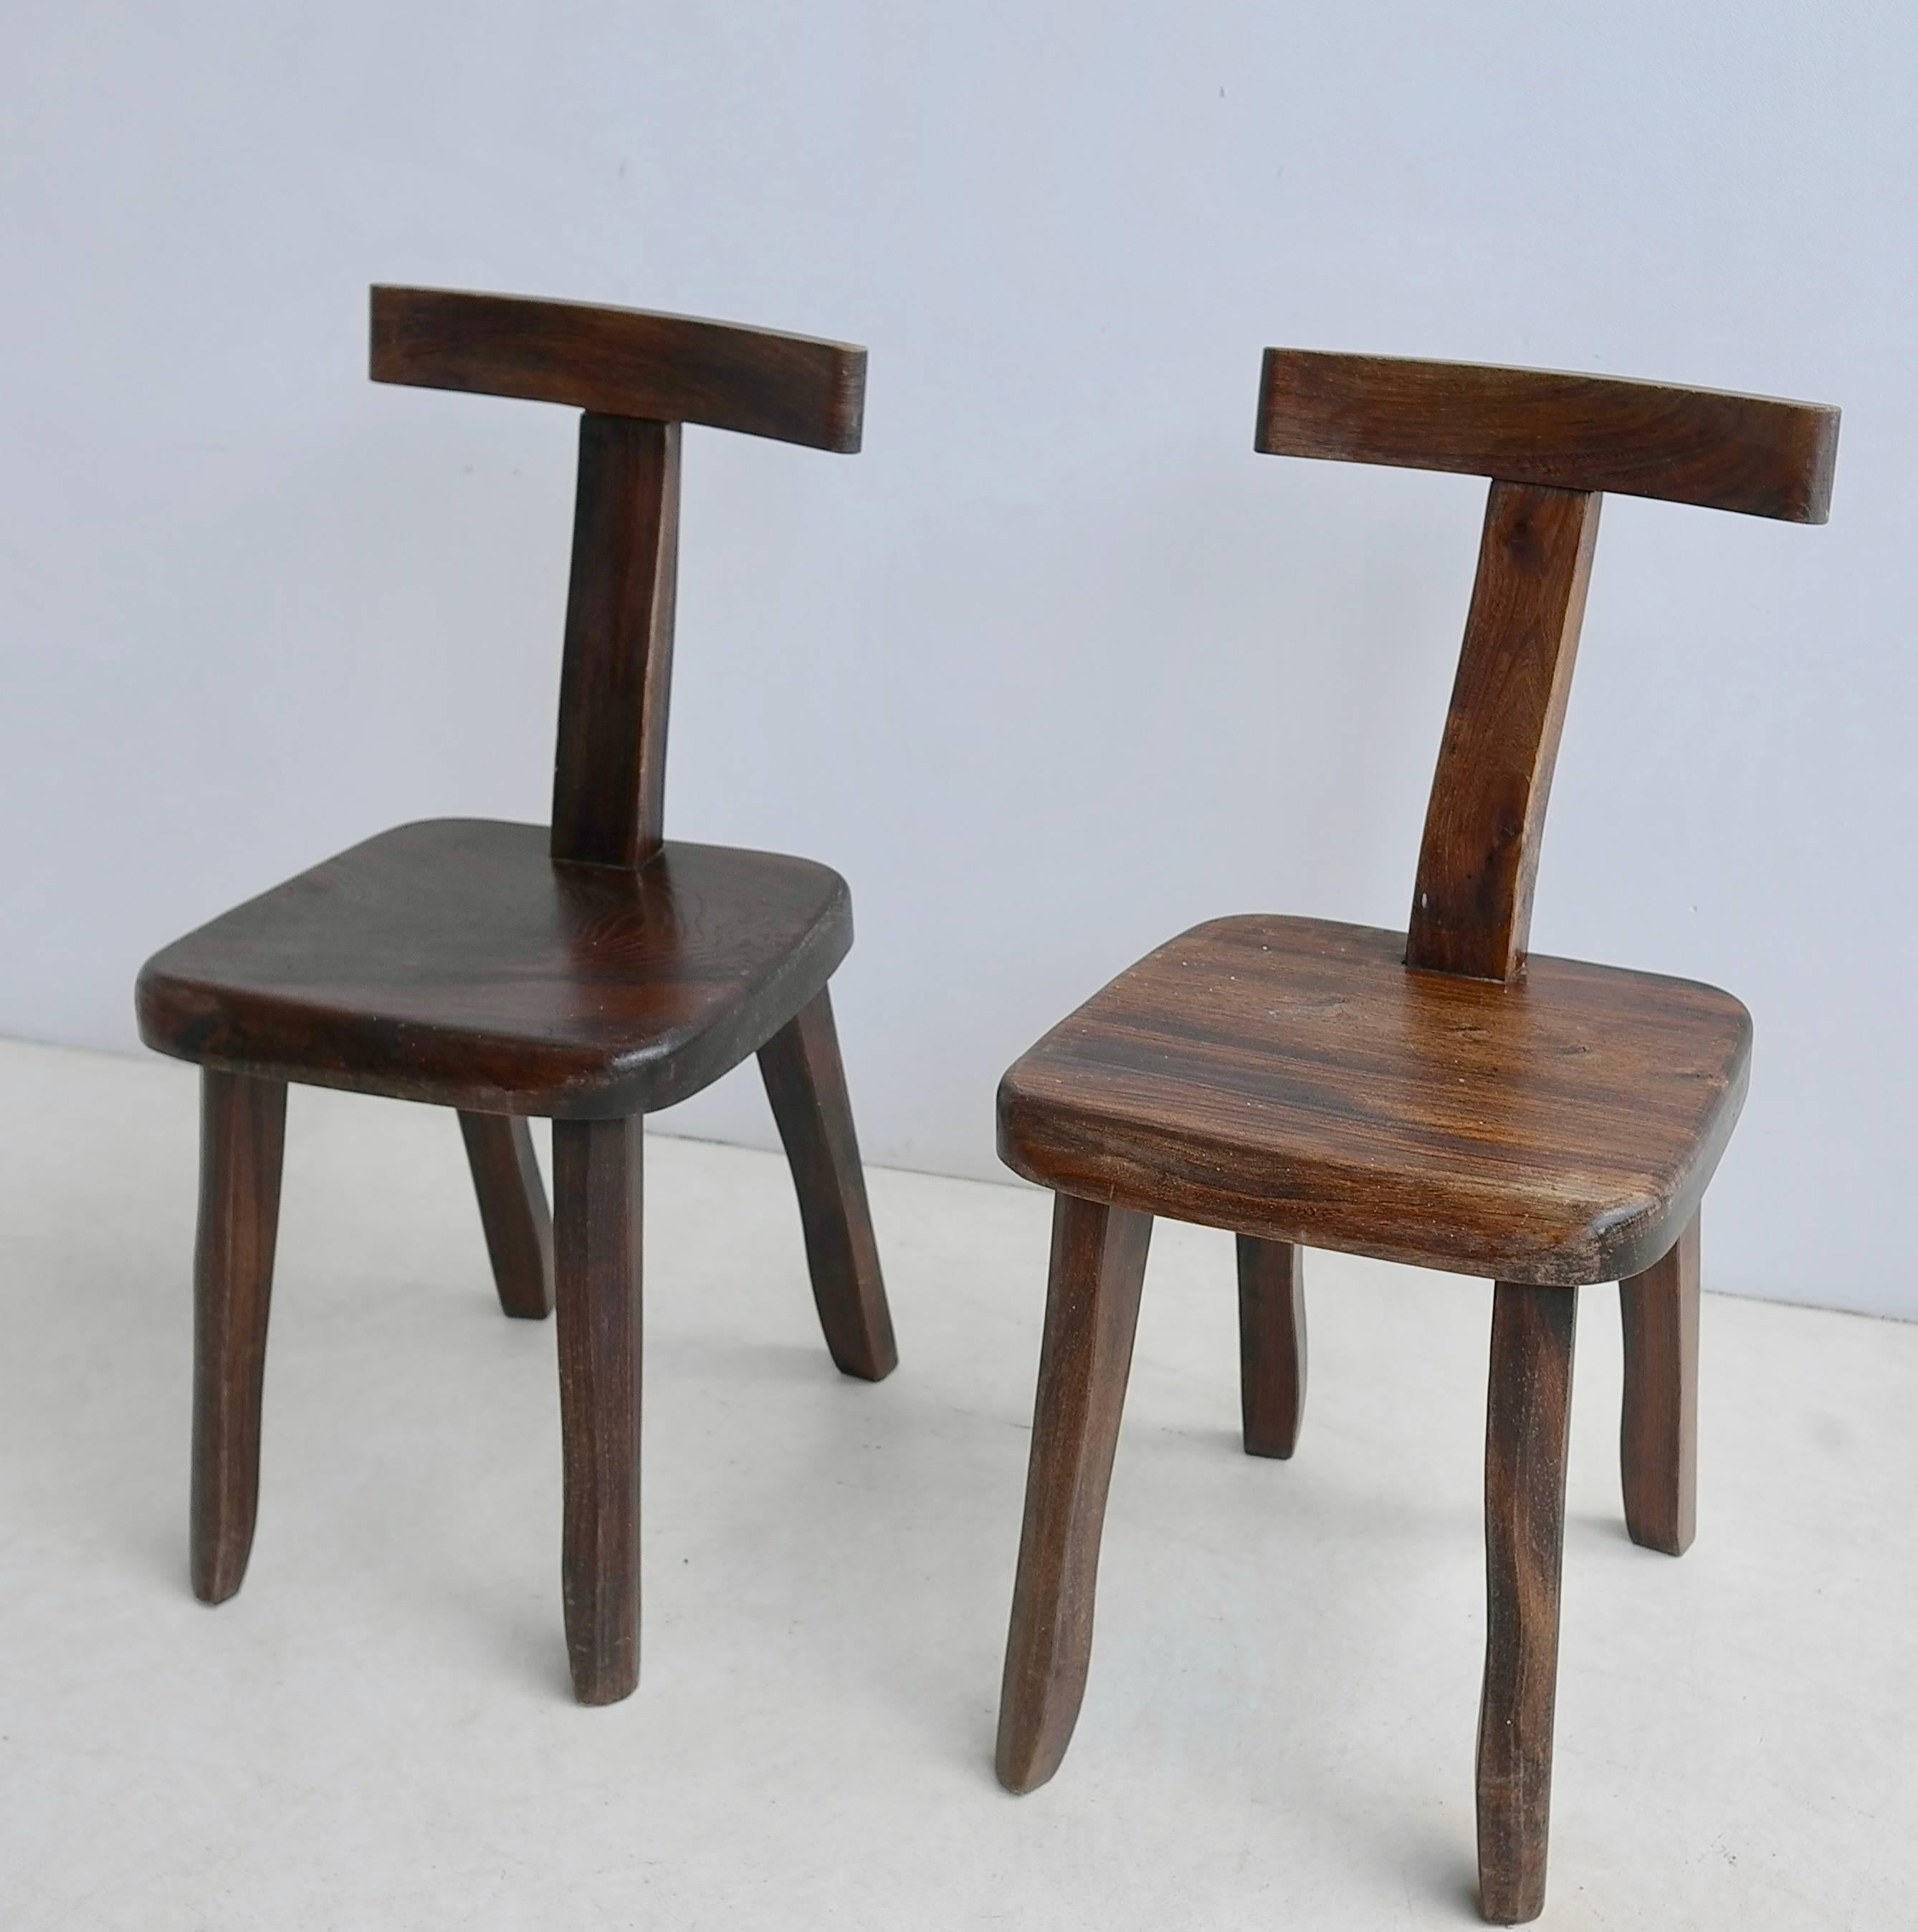 Pair of chairs by Olavi Hanninen manufactured by Mikko Nupponen, Finland, 1950s.